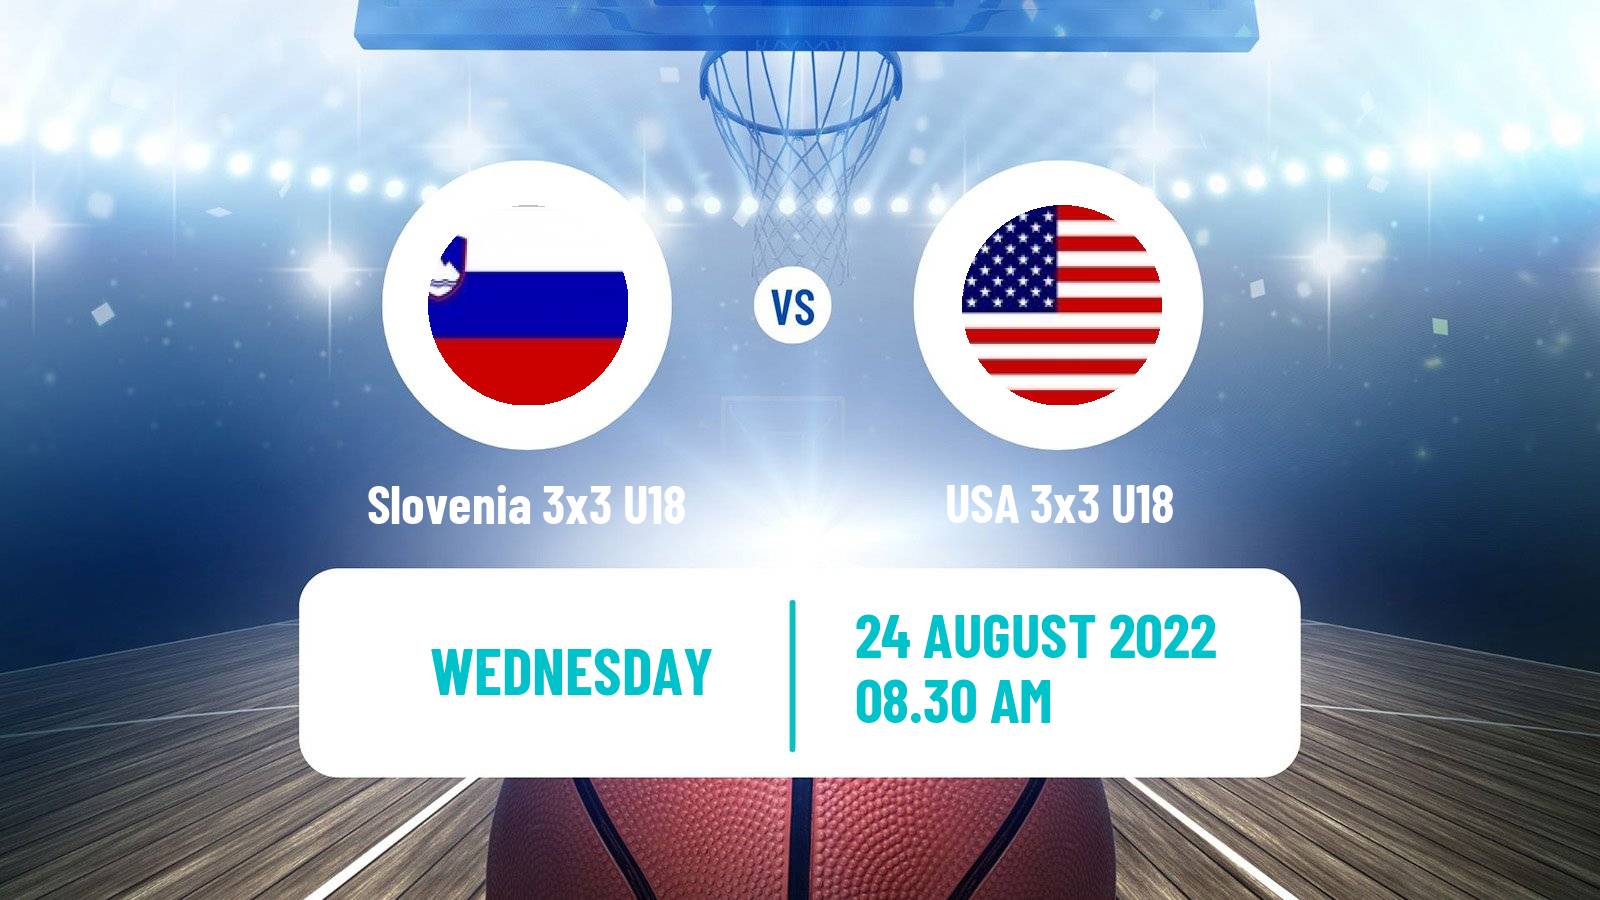 Basketball World Cup Basketball 3x3 U18 Slovenia 3x3 U18 - USA 3x3 U18